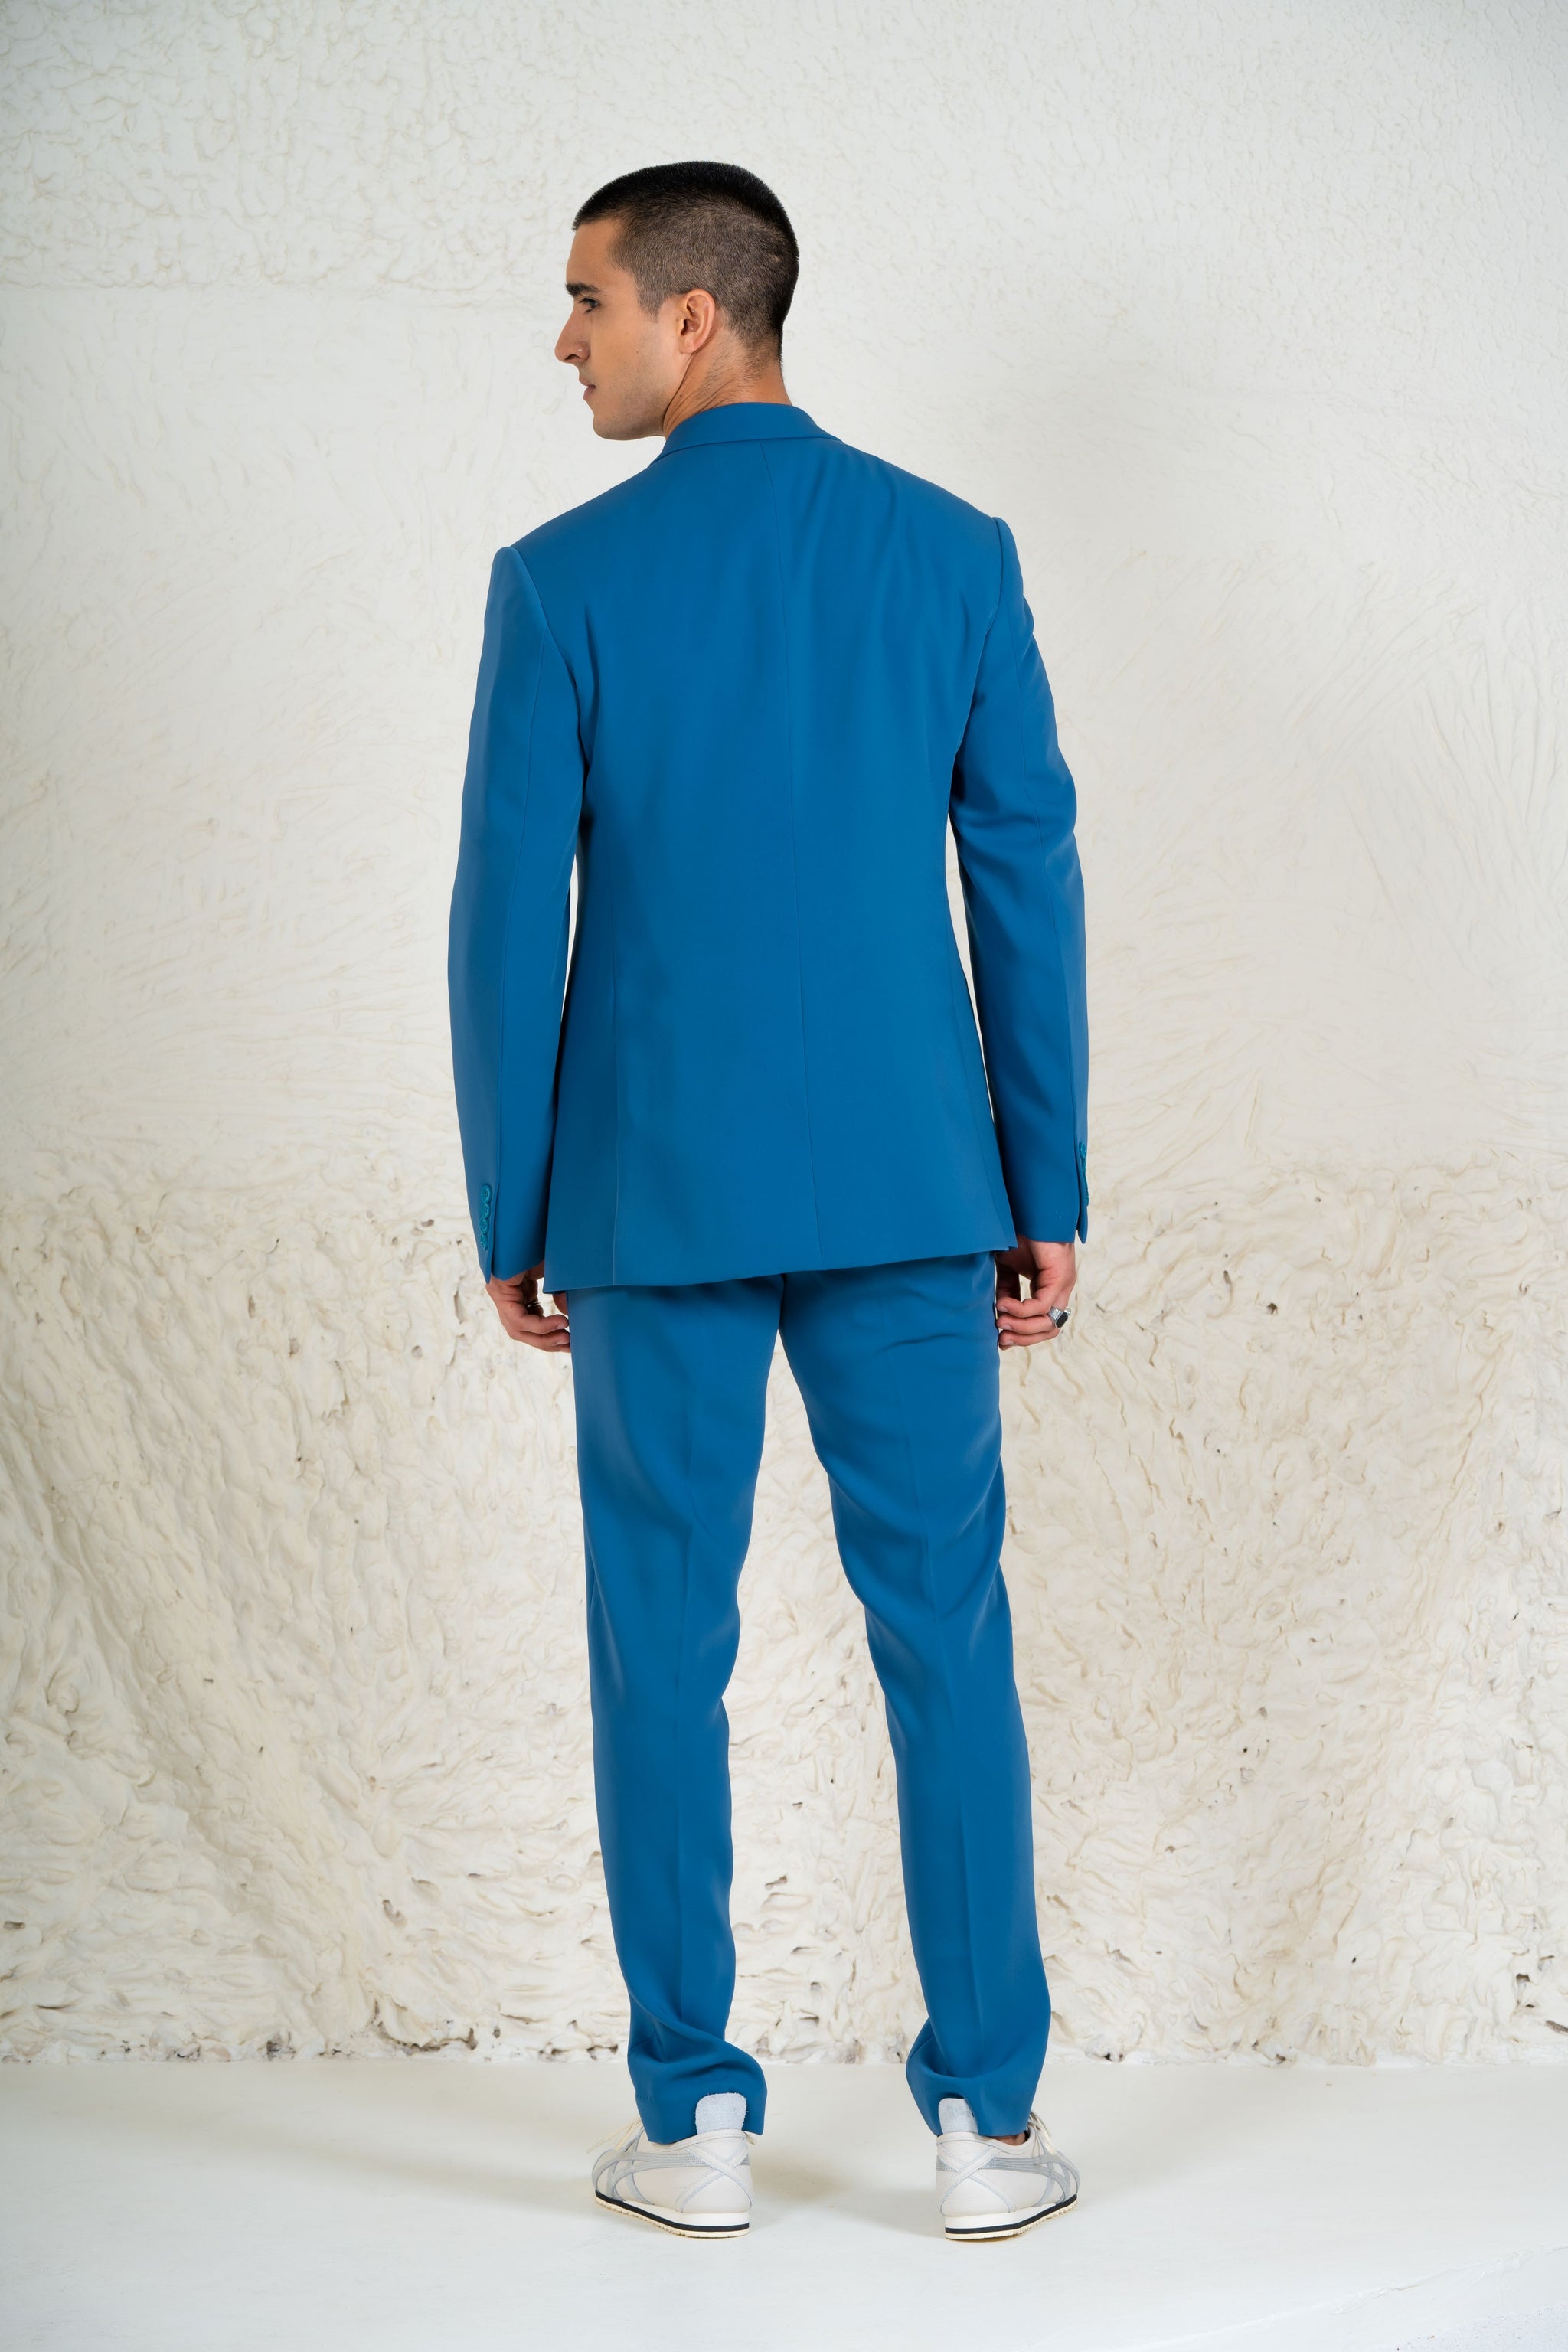 Summer Teal blue suit